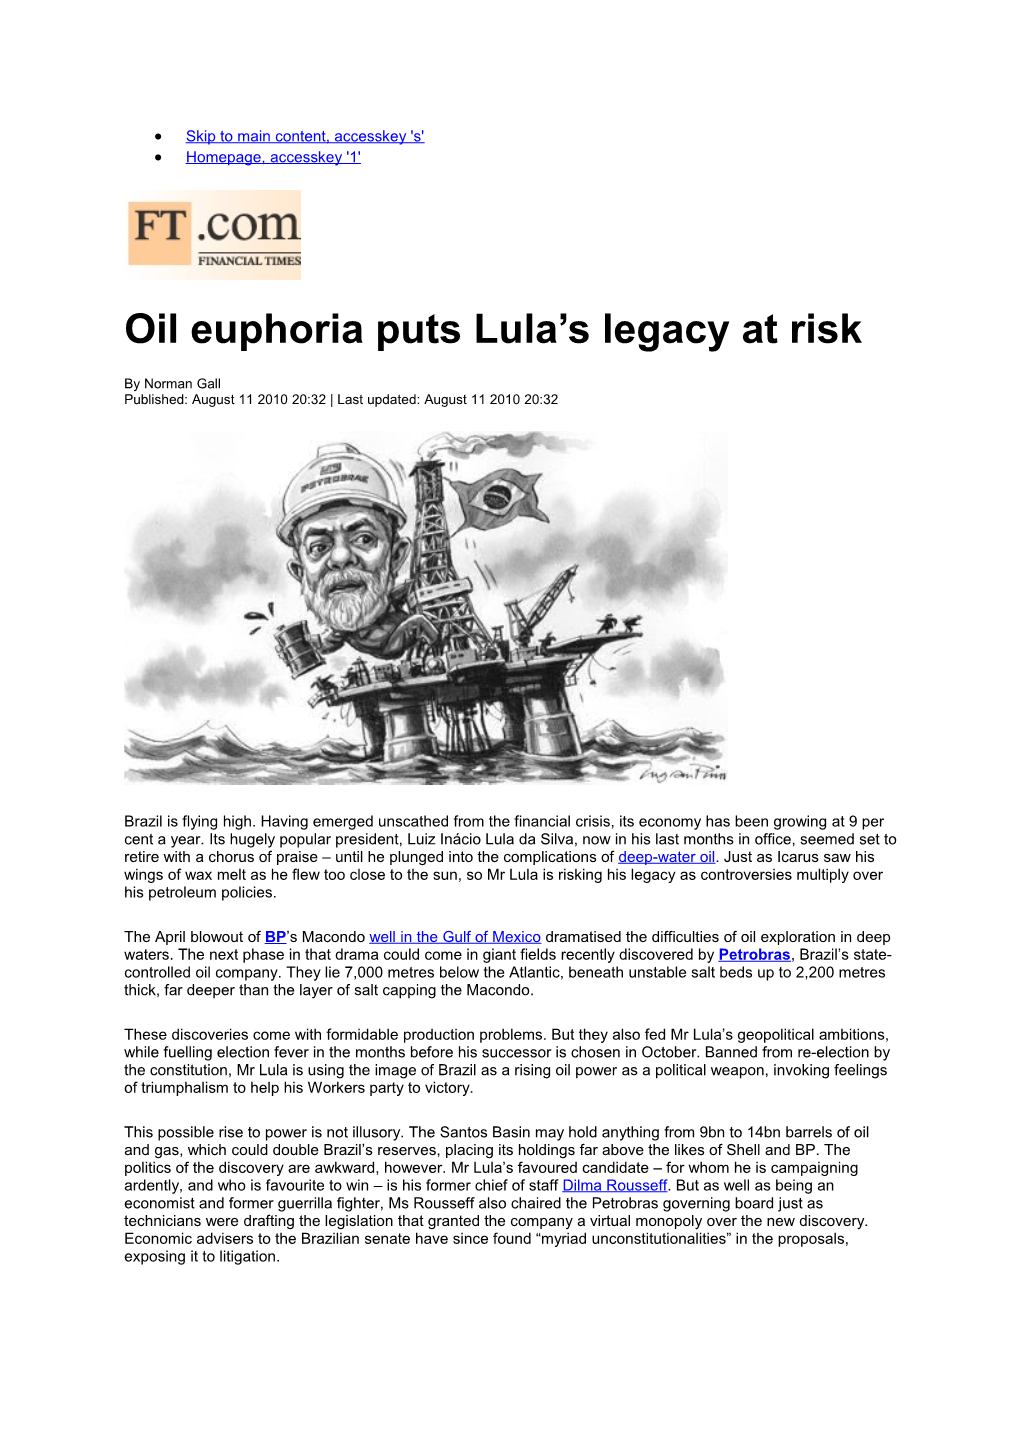 Oil Euphoria Puts Lula S Legacy at Risk